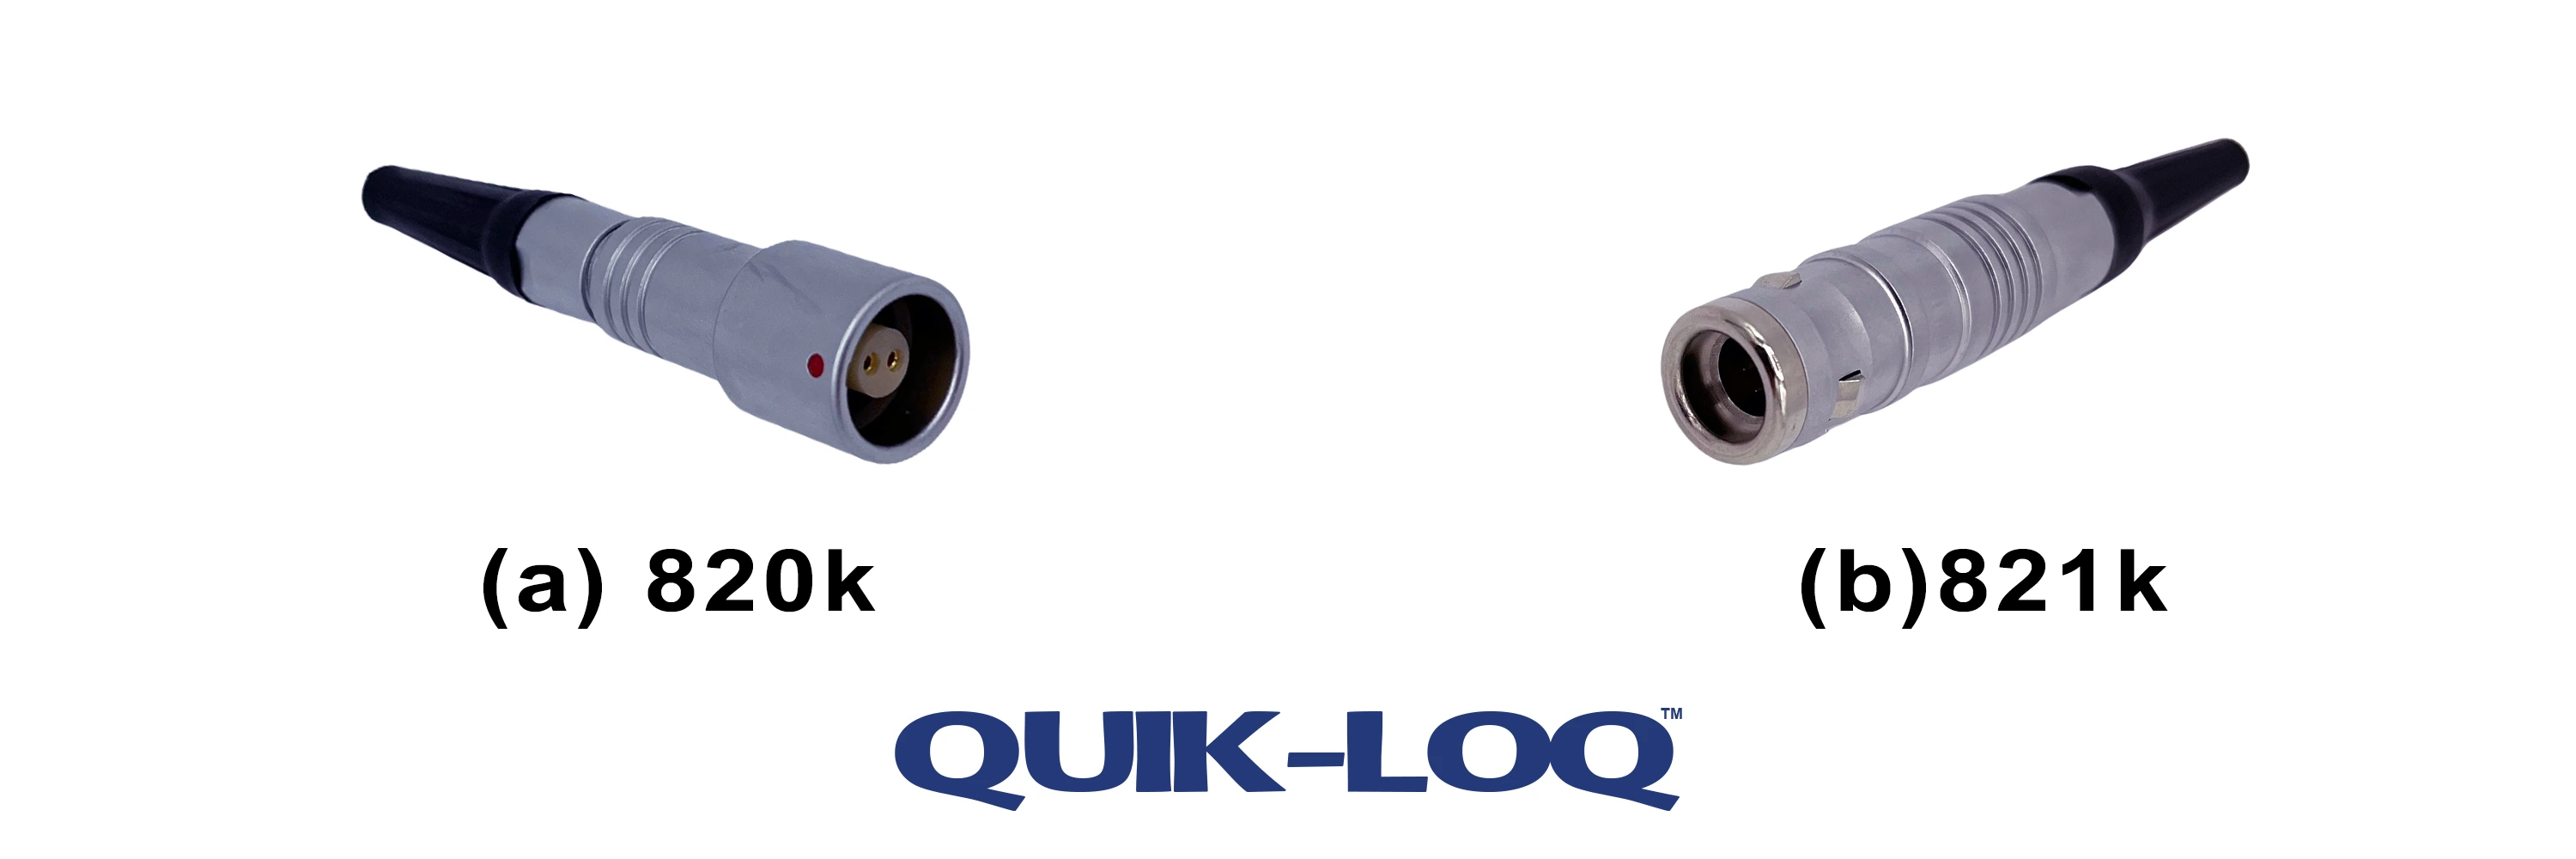 Figure 2: QUIK-LOQ™ push-pull connectors (Source: NorComp)